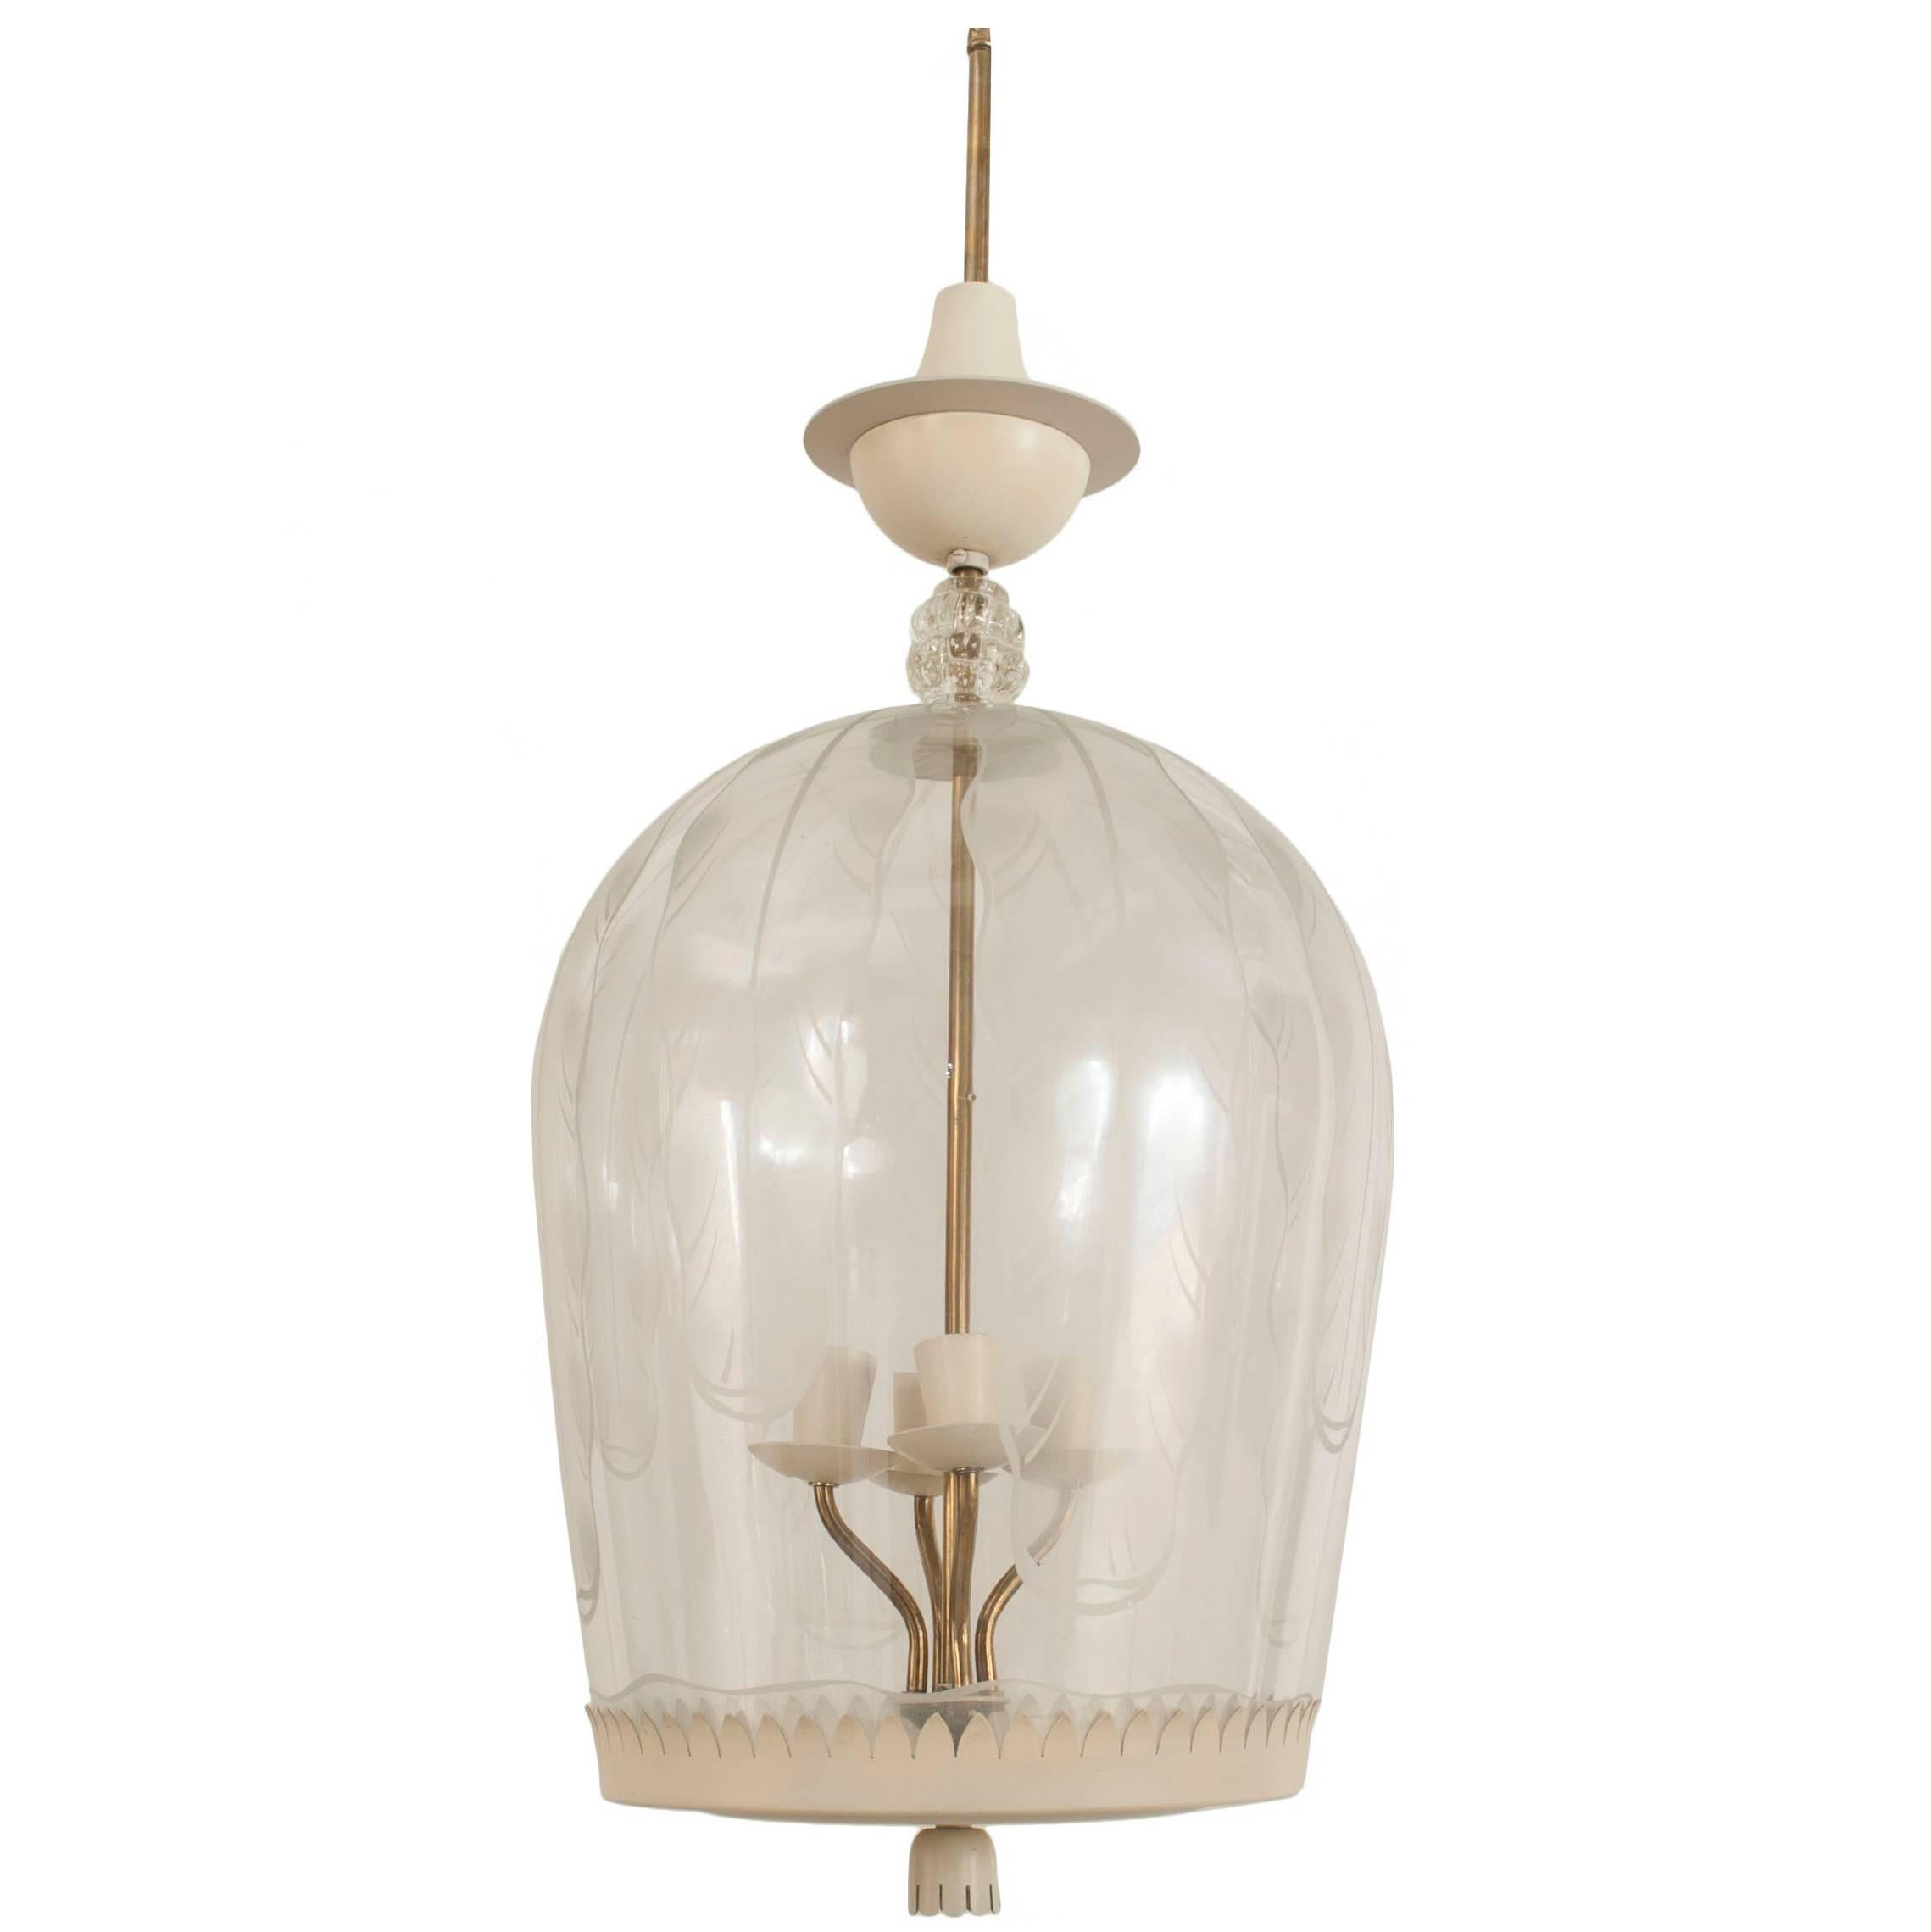 Italian Mid-Century Fontana Arte Glass Dome Lantern For Sale